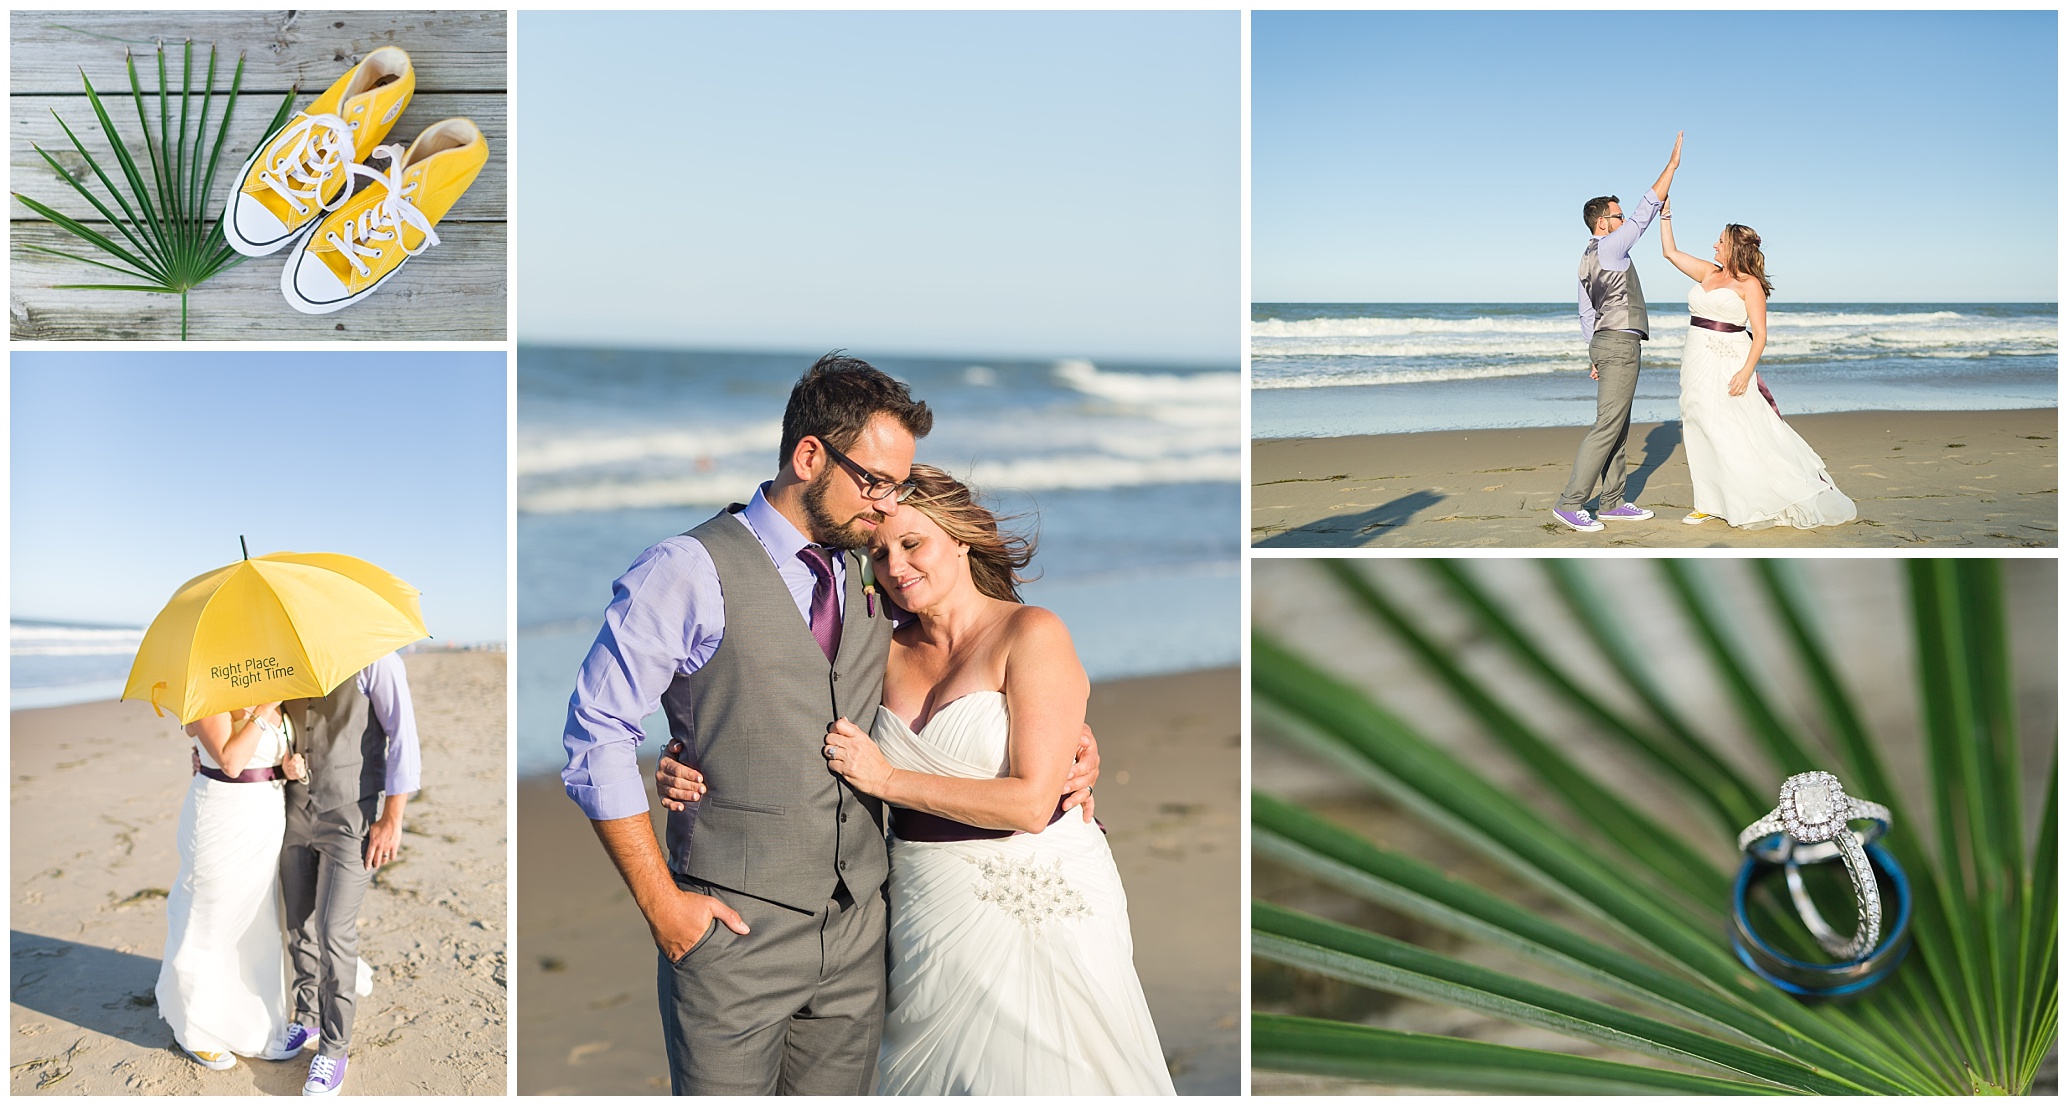 Sunday Fun-Day VA Beach Wedding Luke and Ashley Photography